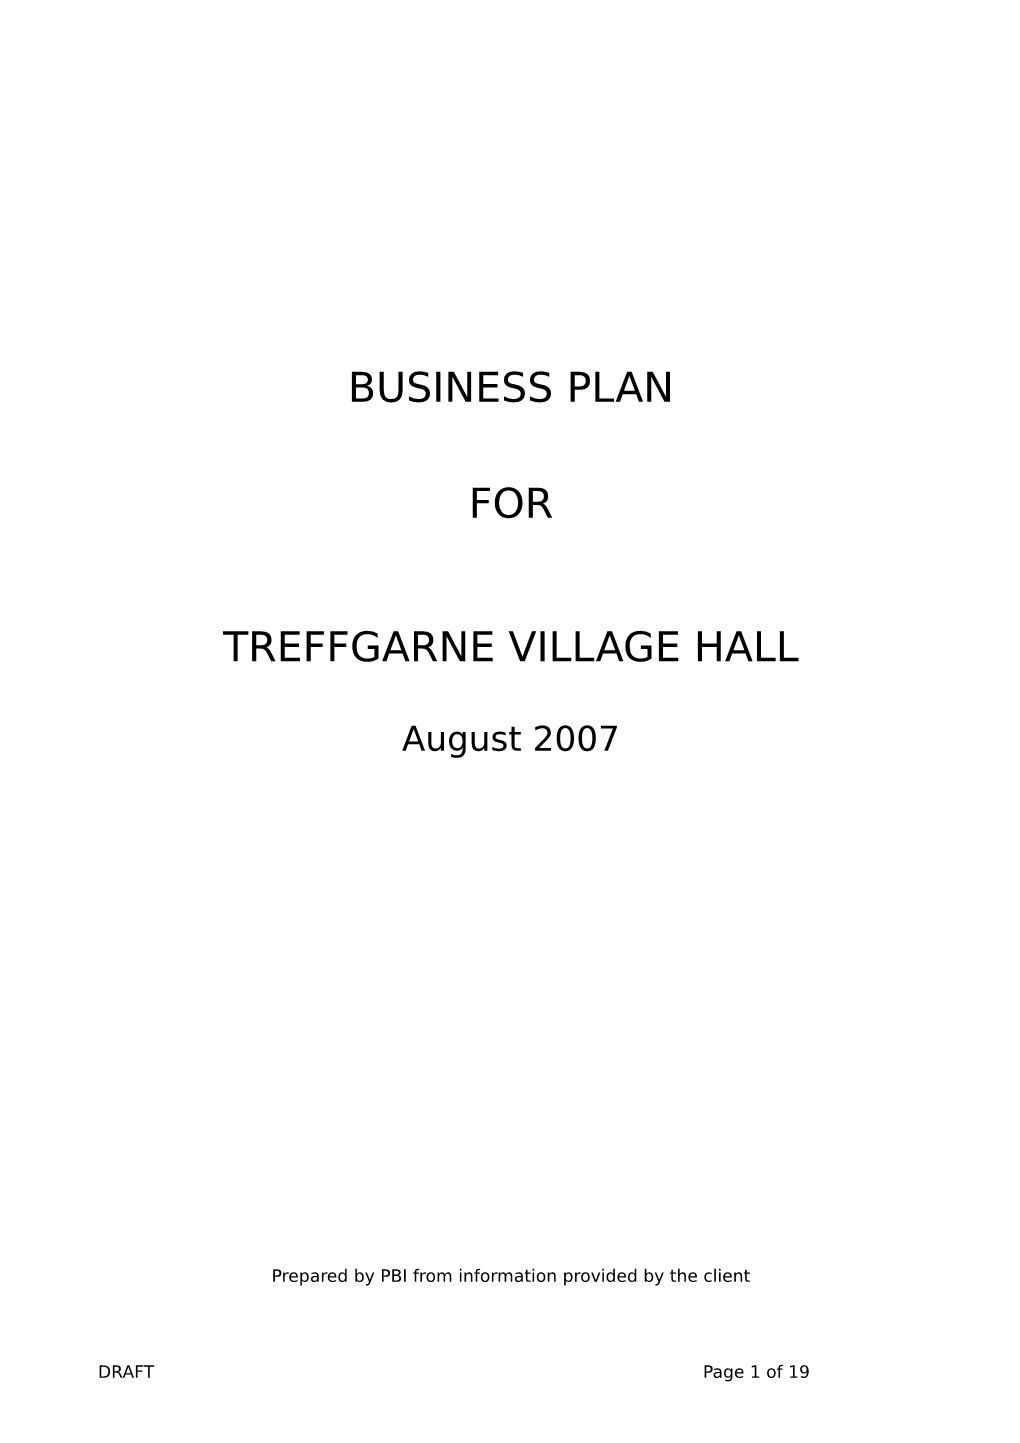 Treffgarne Village Hall